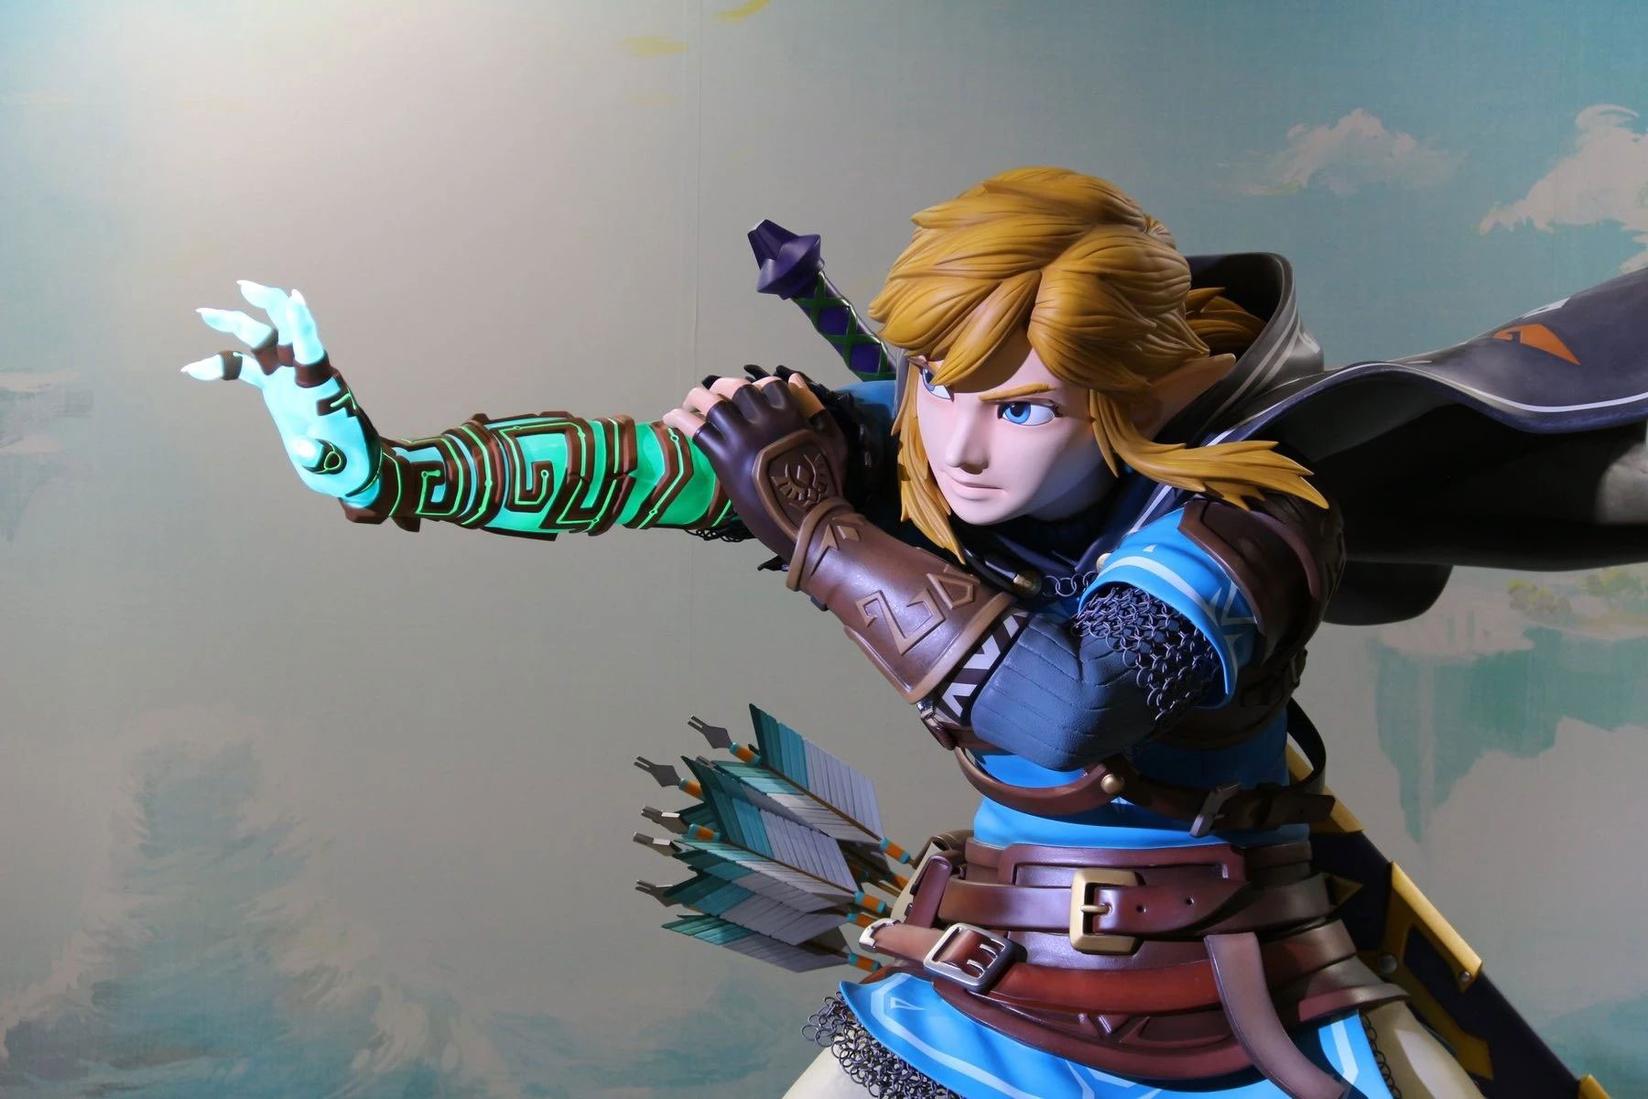 Selected image for NINTENDO Igrica za Nintendo Switch The Legend of Zelda Tears of The Kingdom